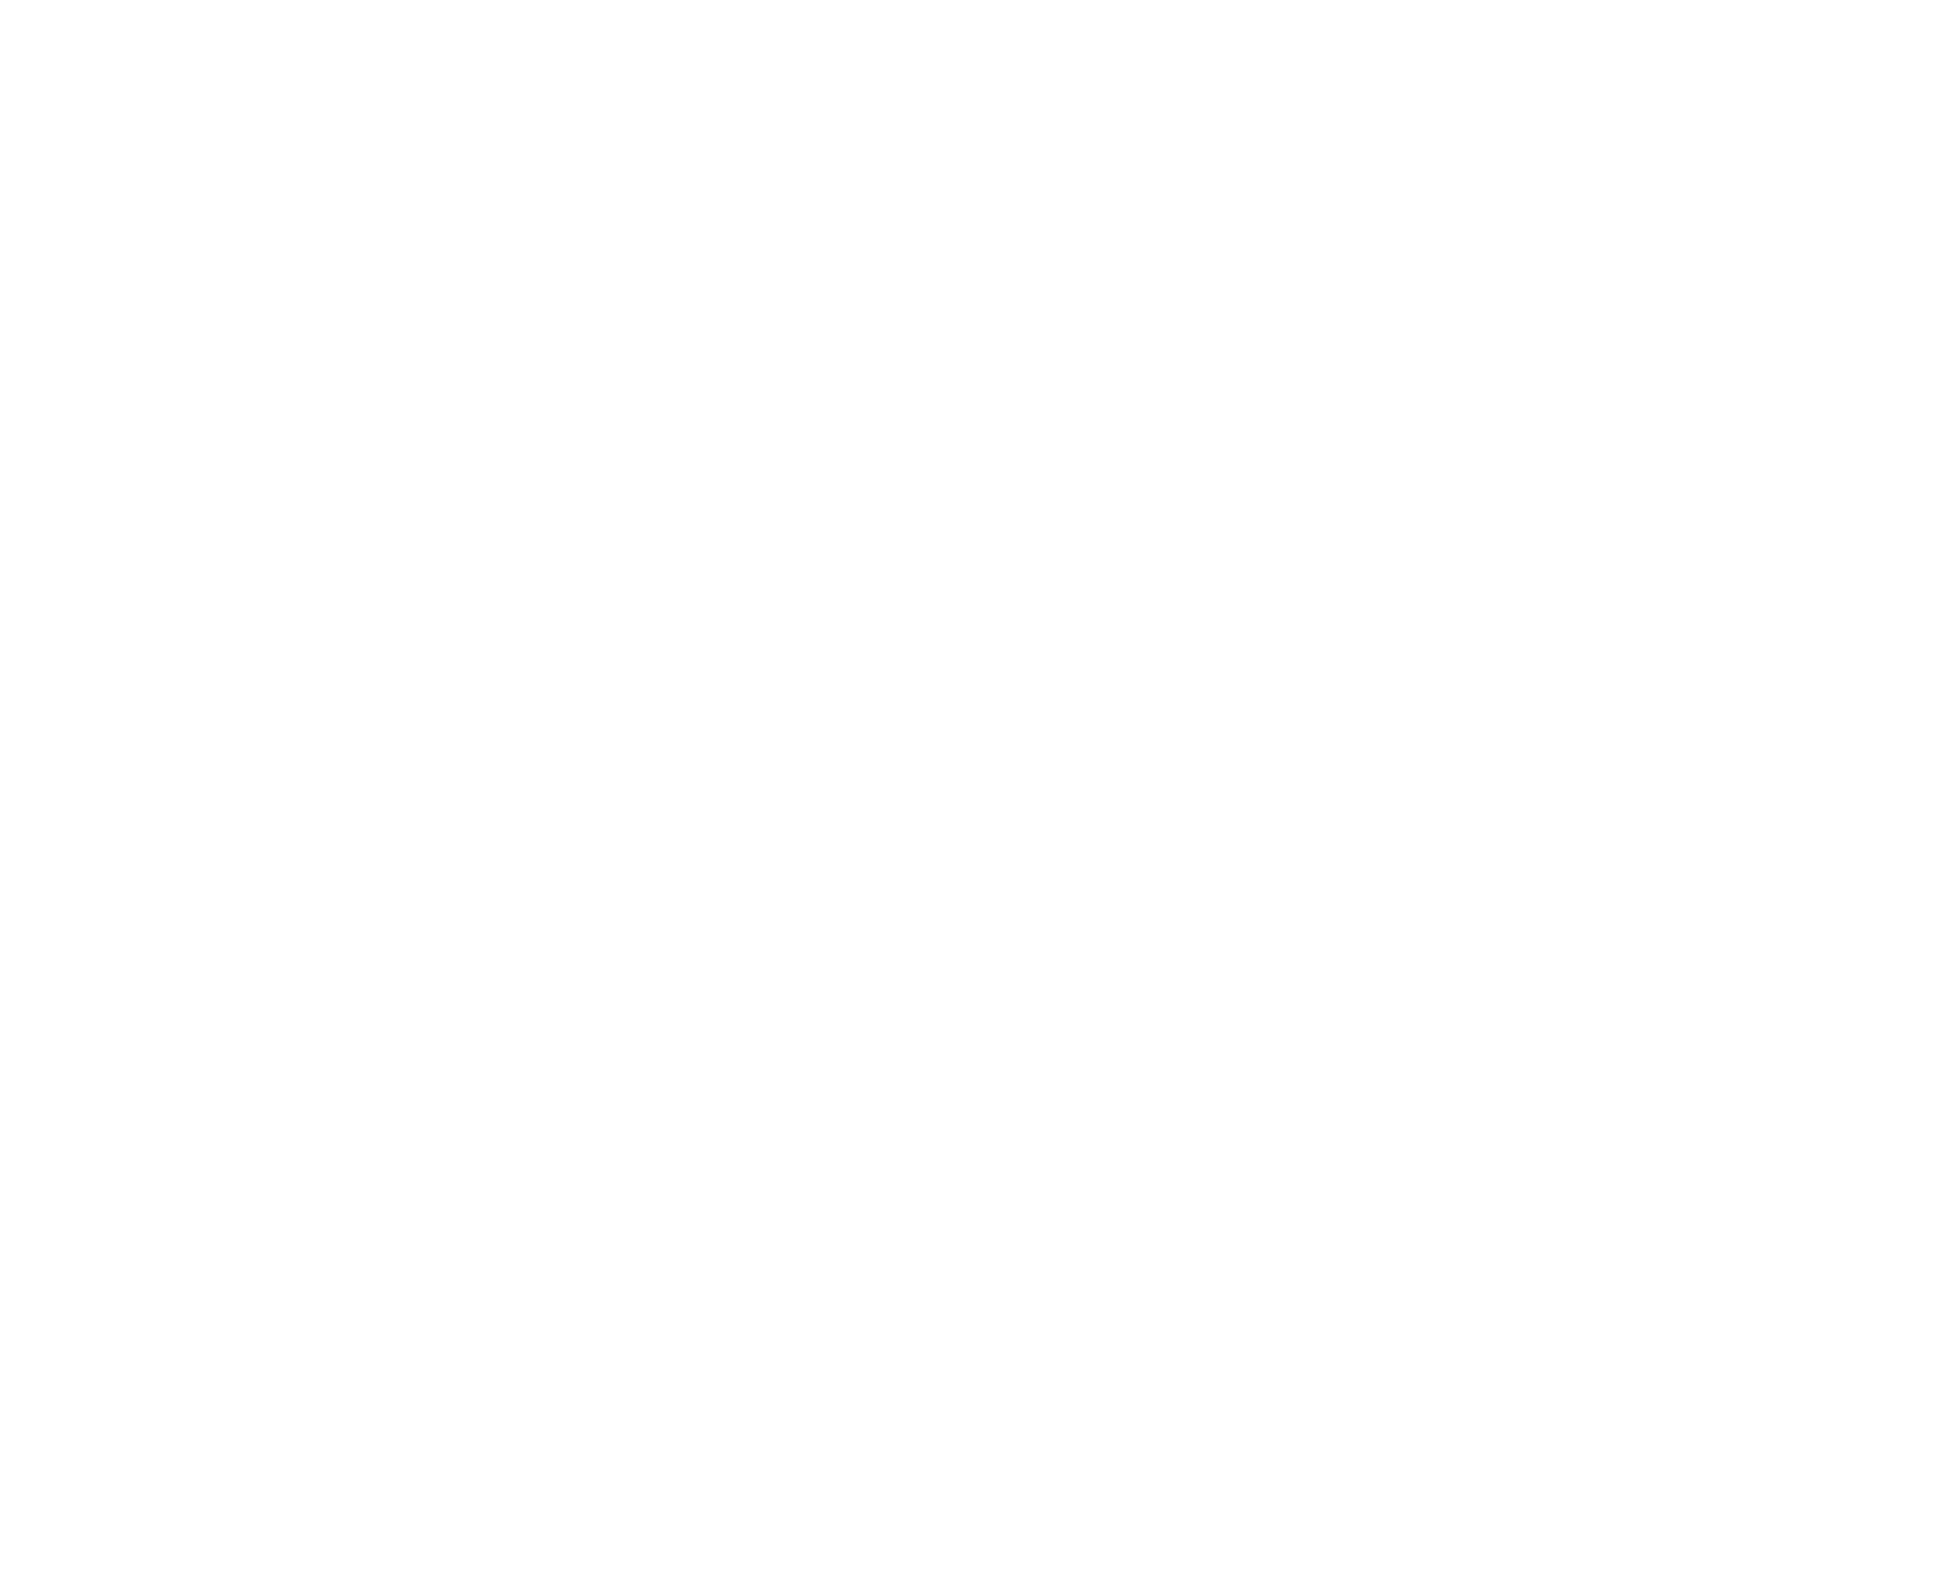 Men's World Championship 2022